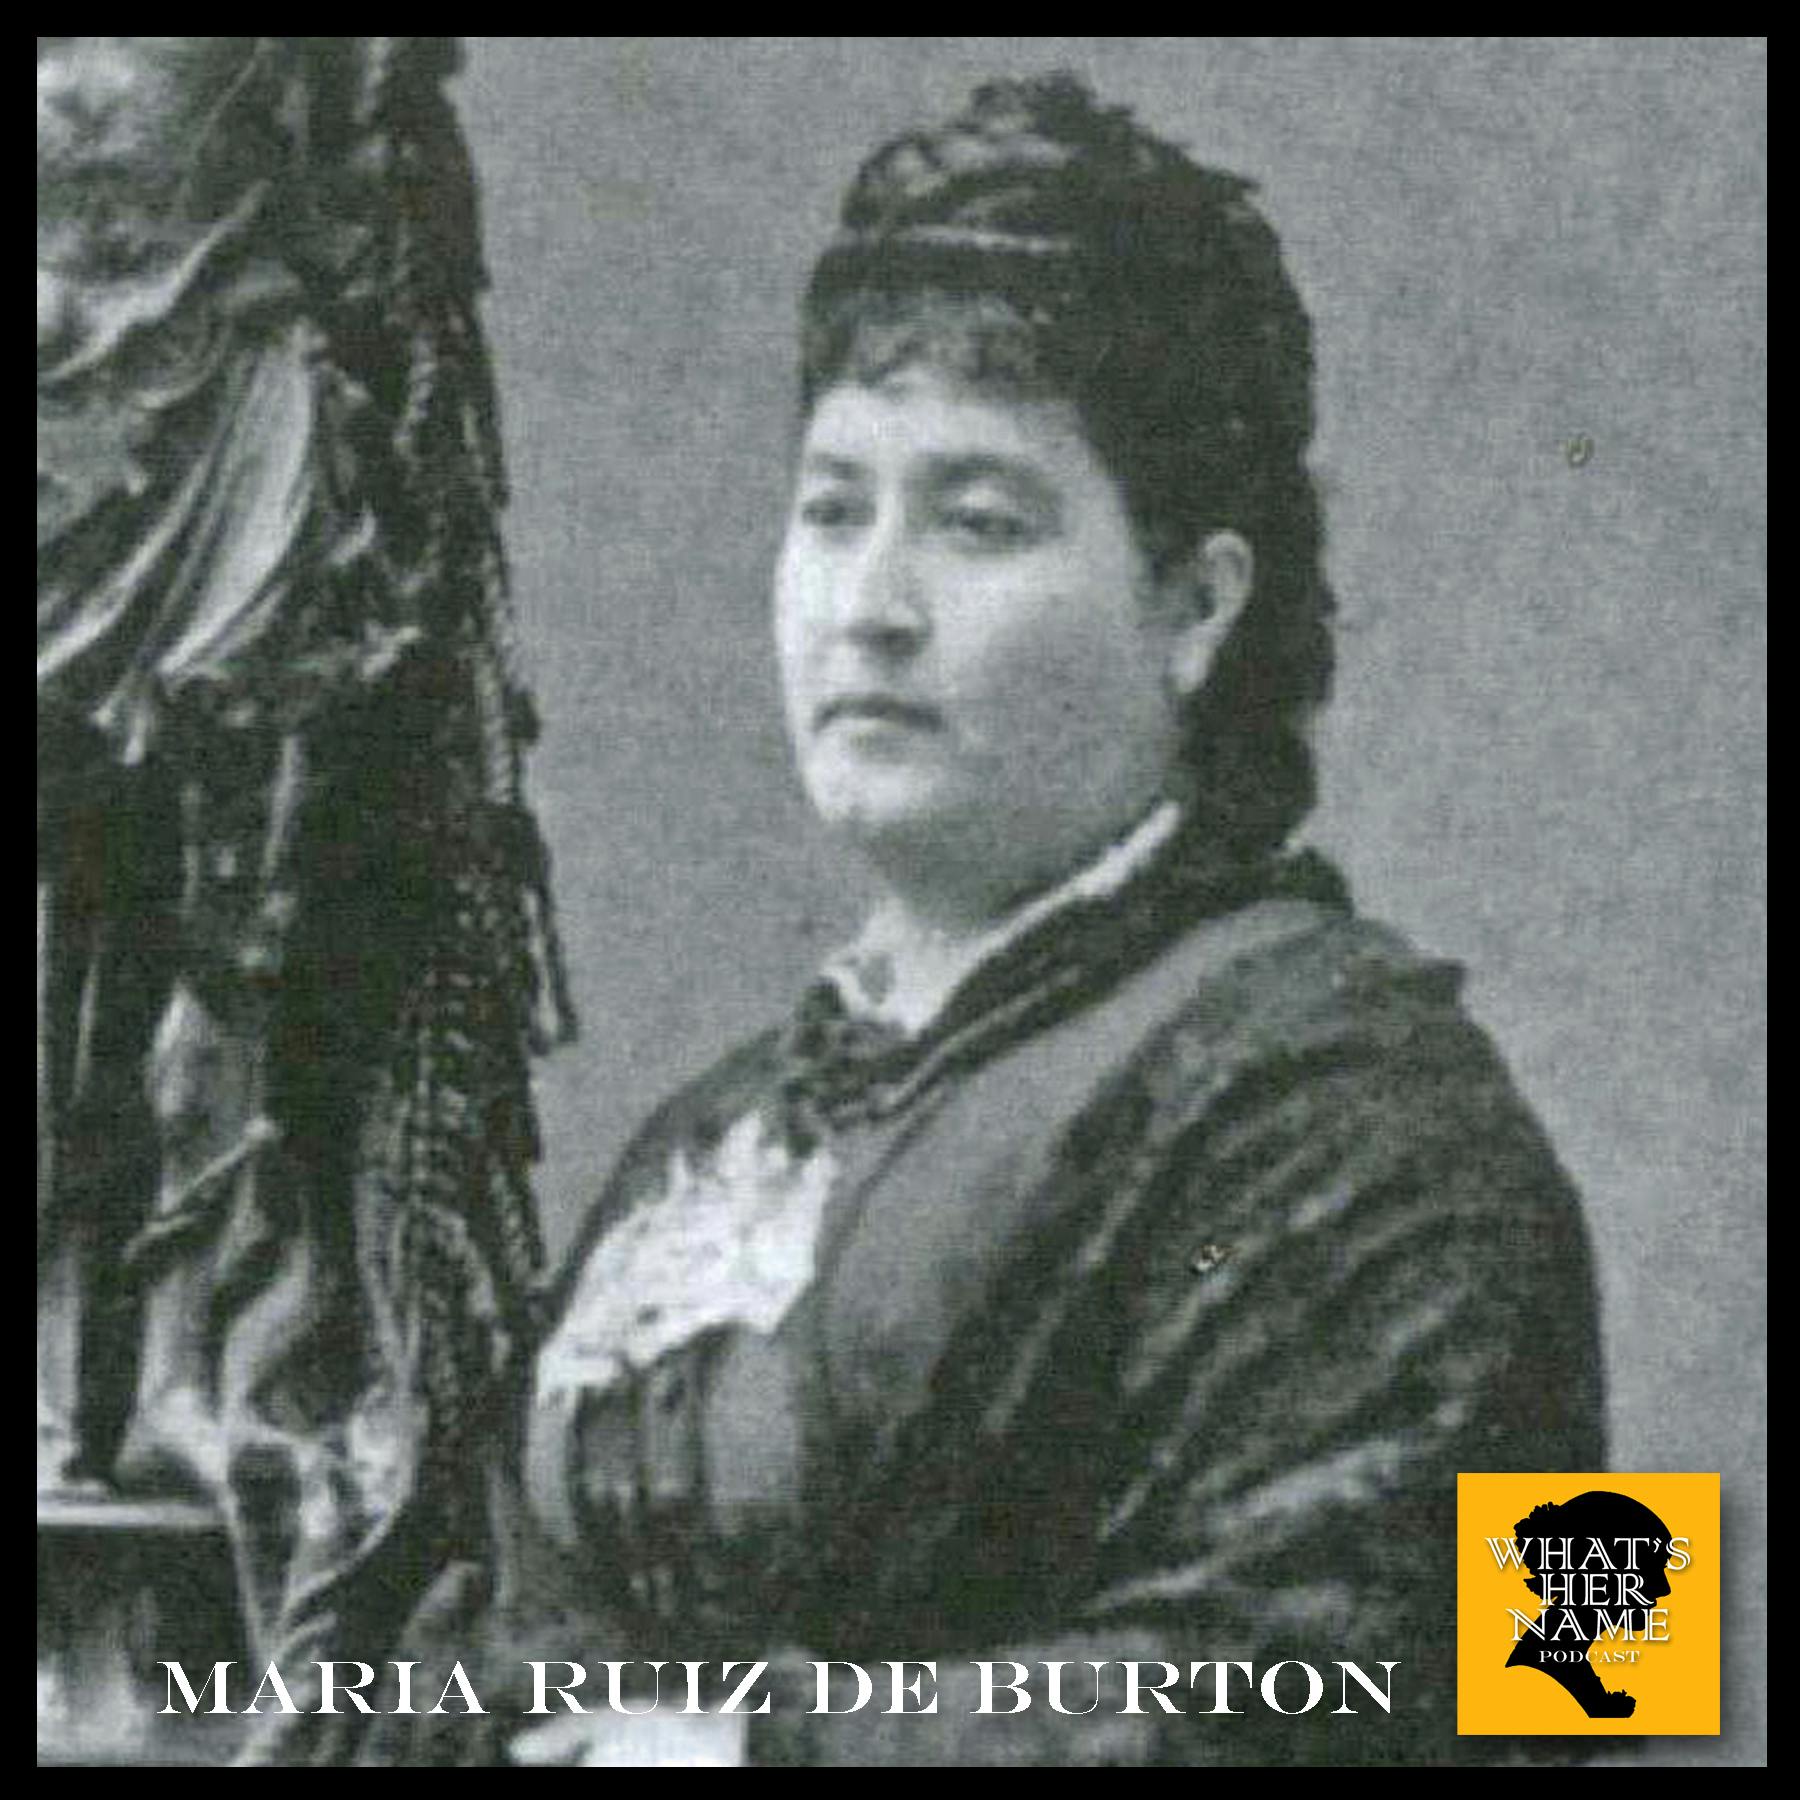 THE MAID OF MONTEREY Maria Ruiz de Burton